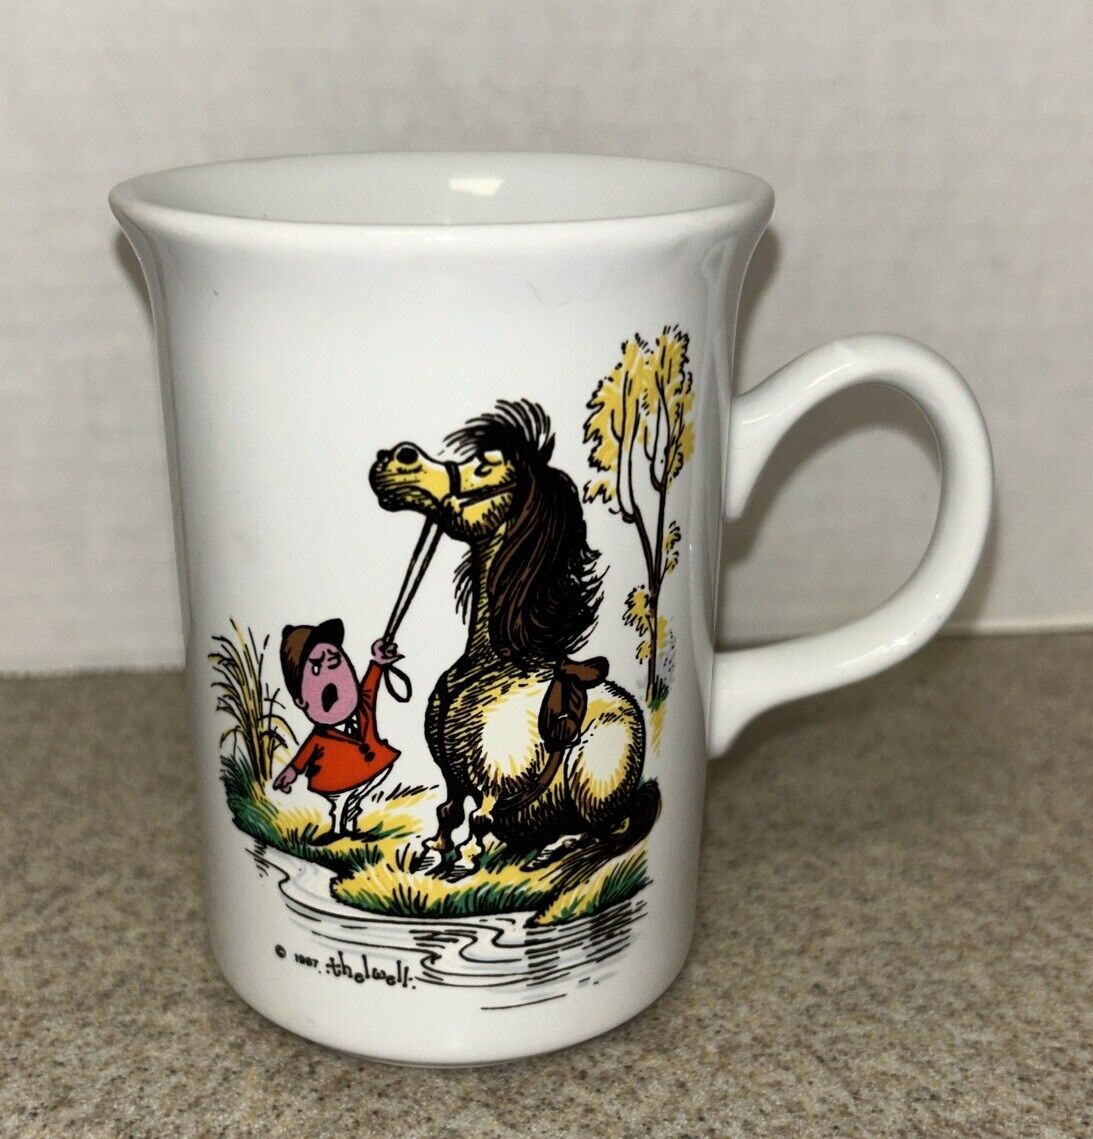 Thelwell Equestrian Horse Cartoons, Vintage Juice Mug